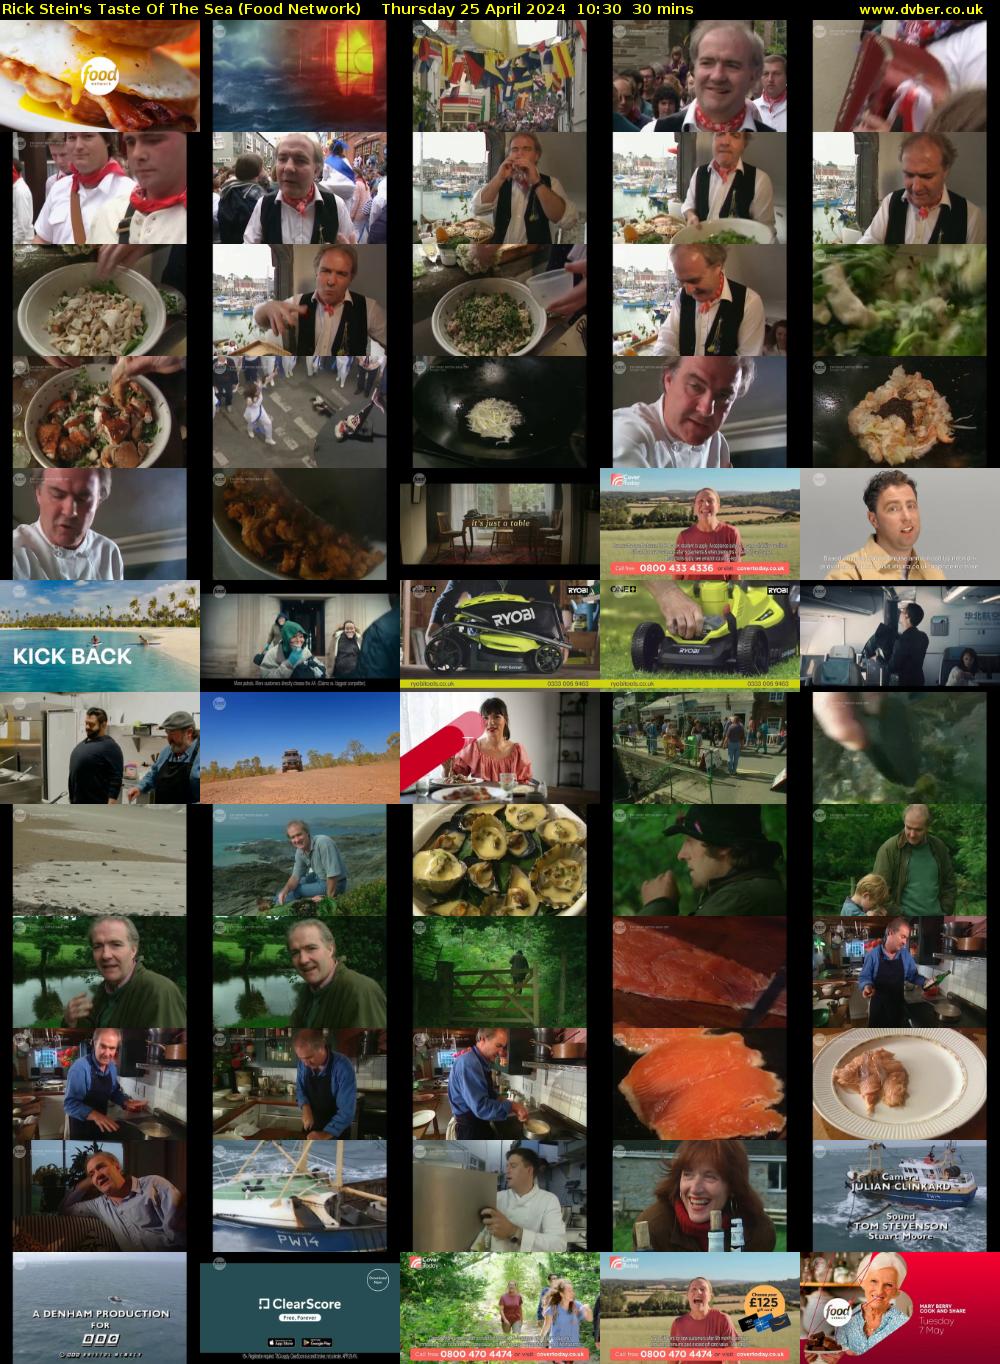 Rick Stein's Taste Of The Sea (Food Network) Thursday 25 April 2024 10:30 - 11:00